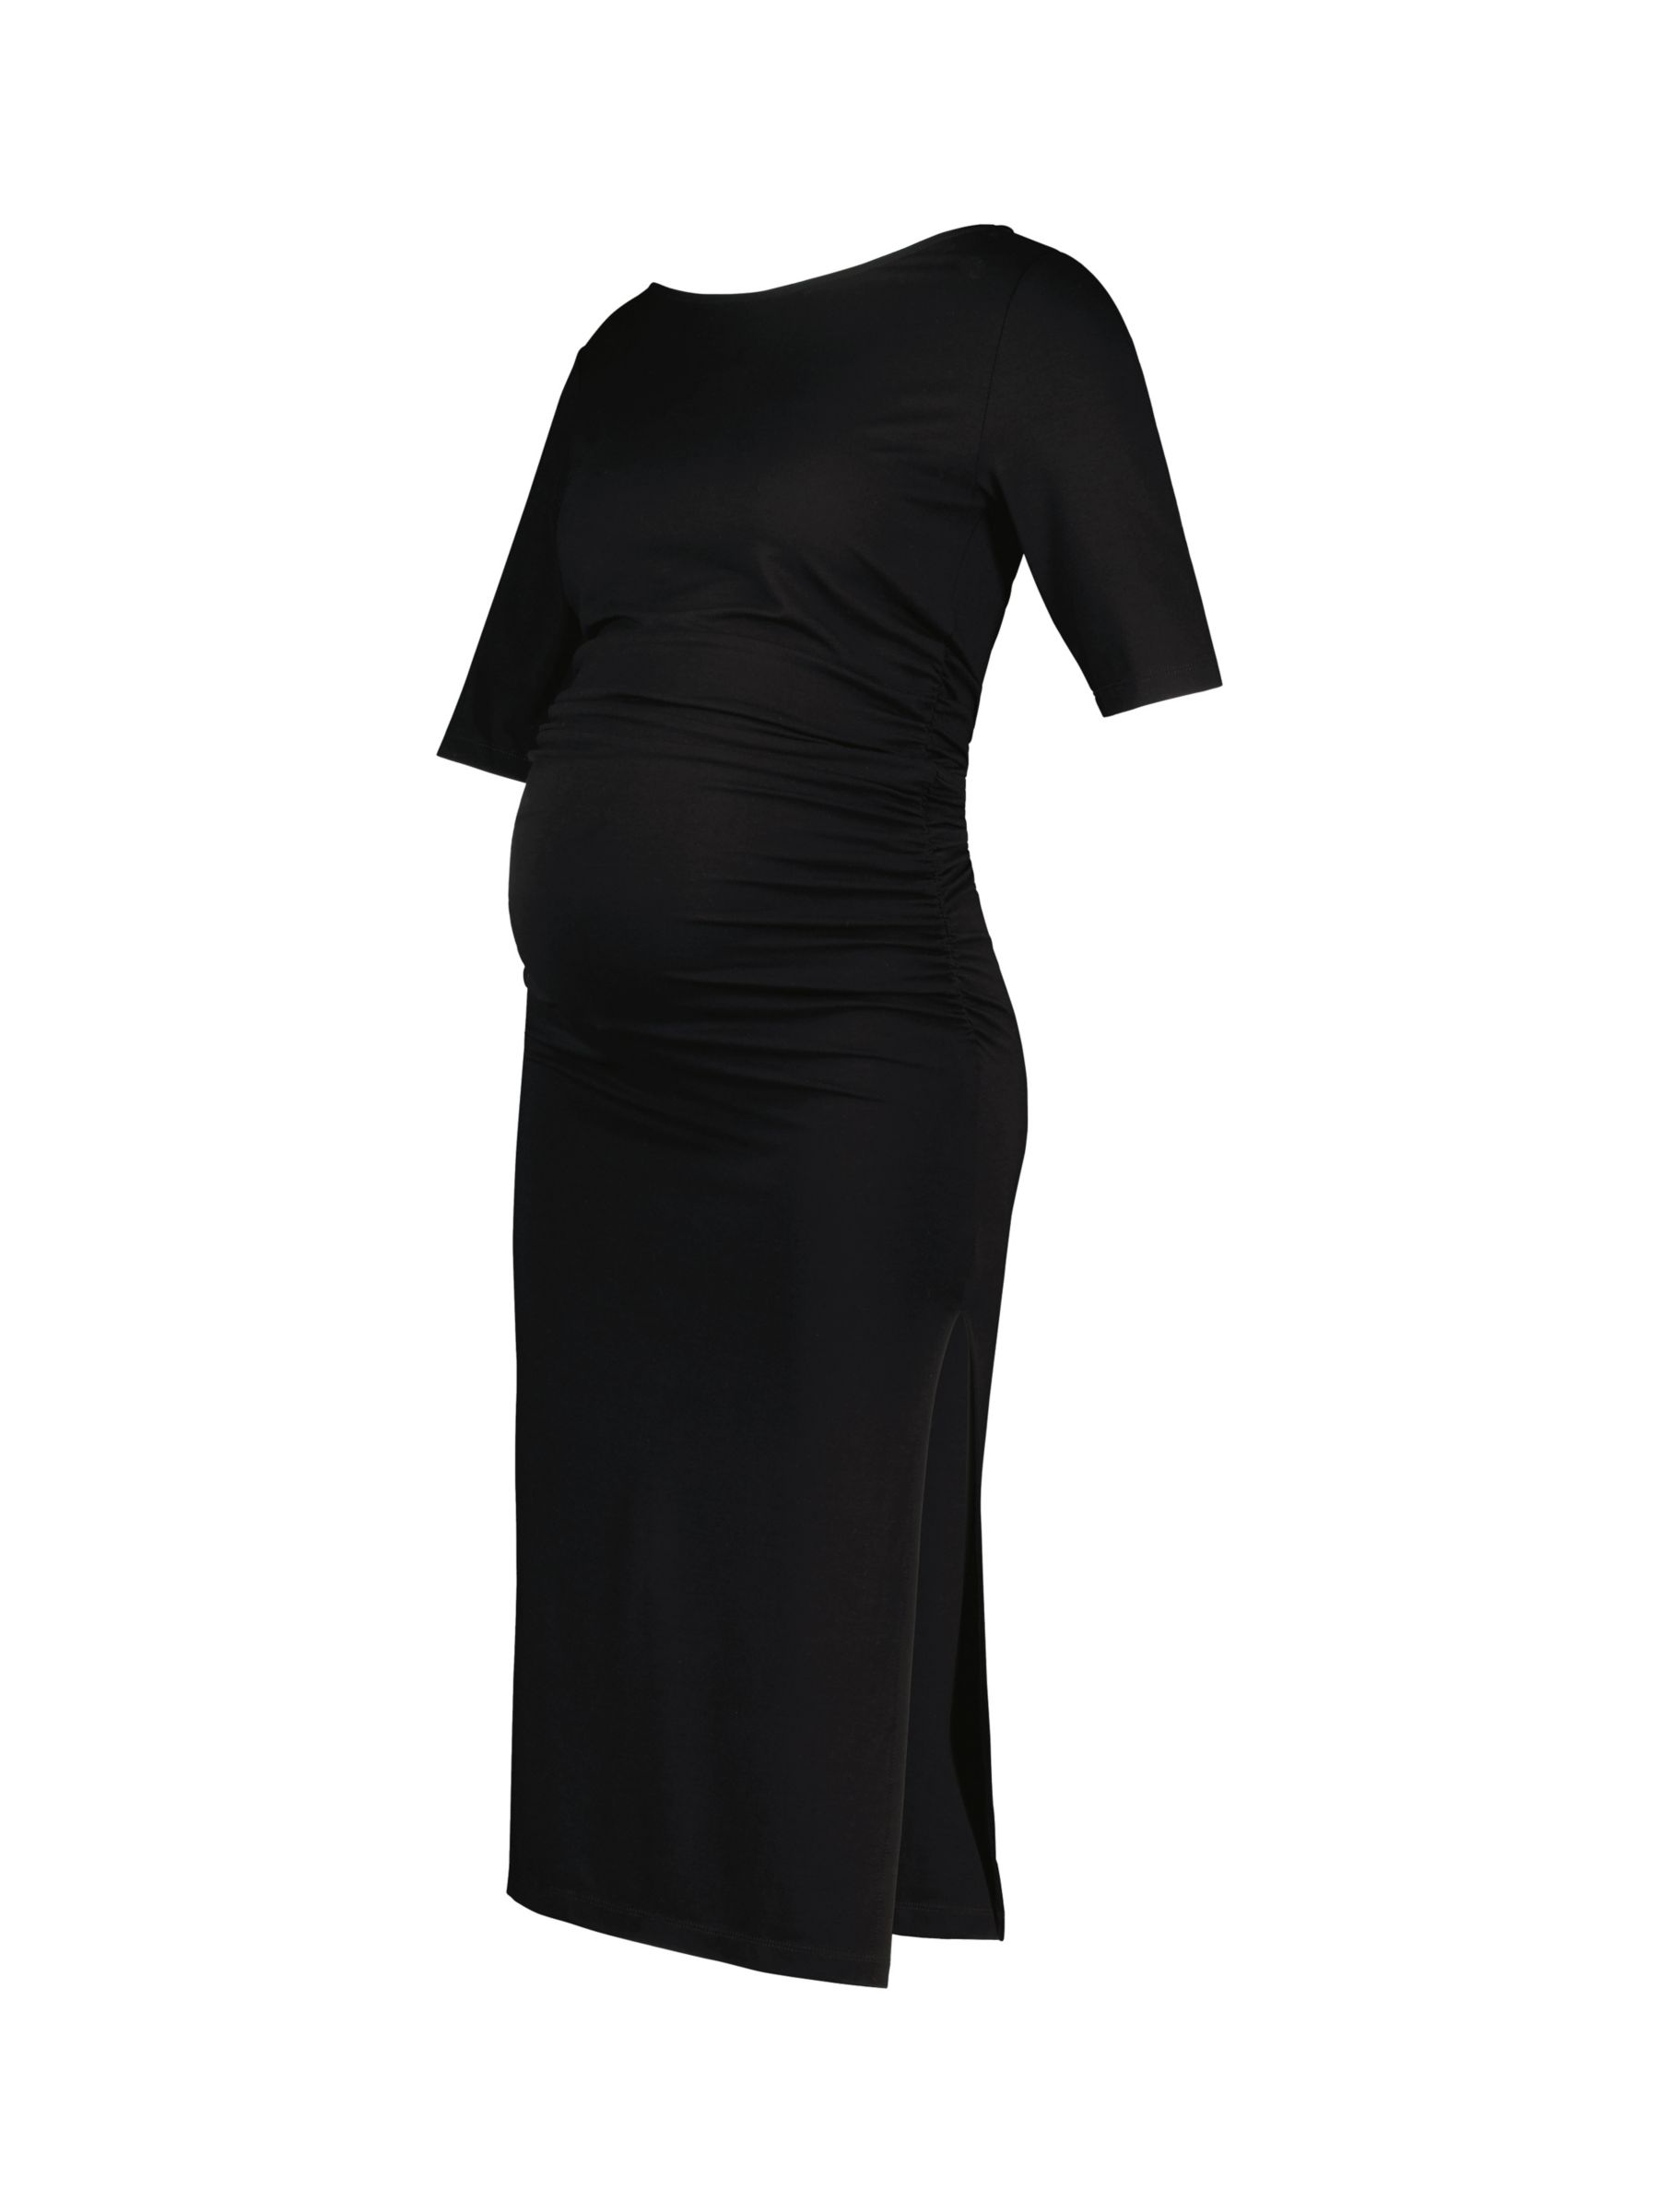 Isabella Oliver Faye Maternity Midi Dress, Caviar Black, 8